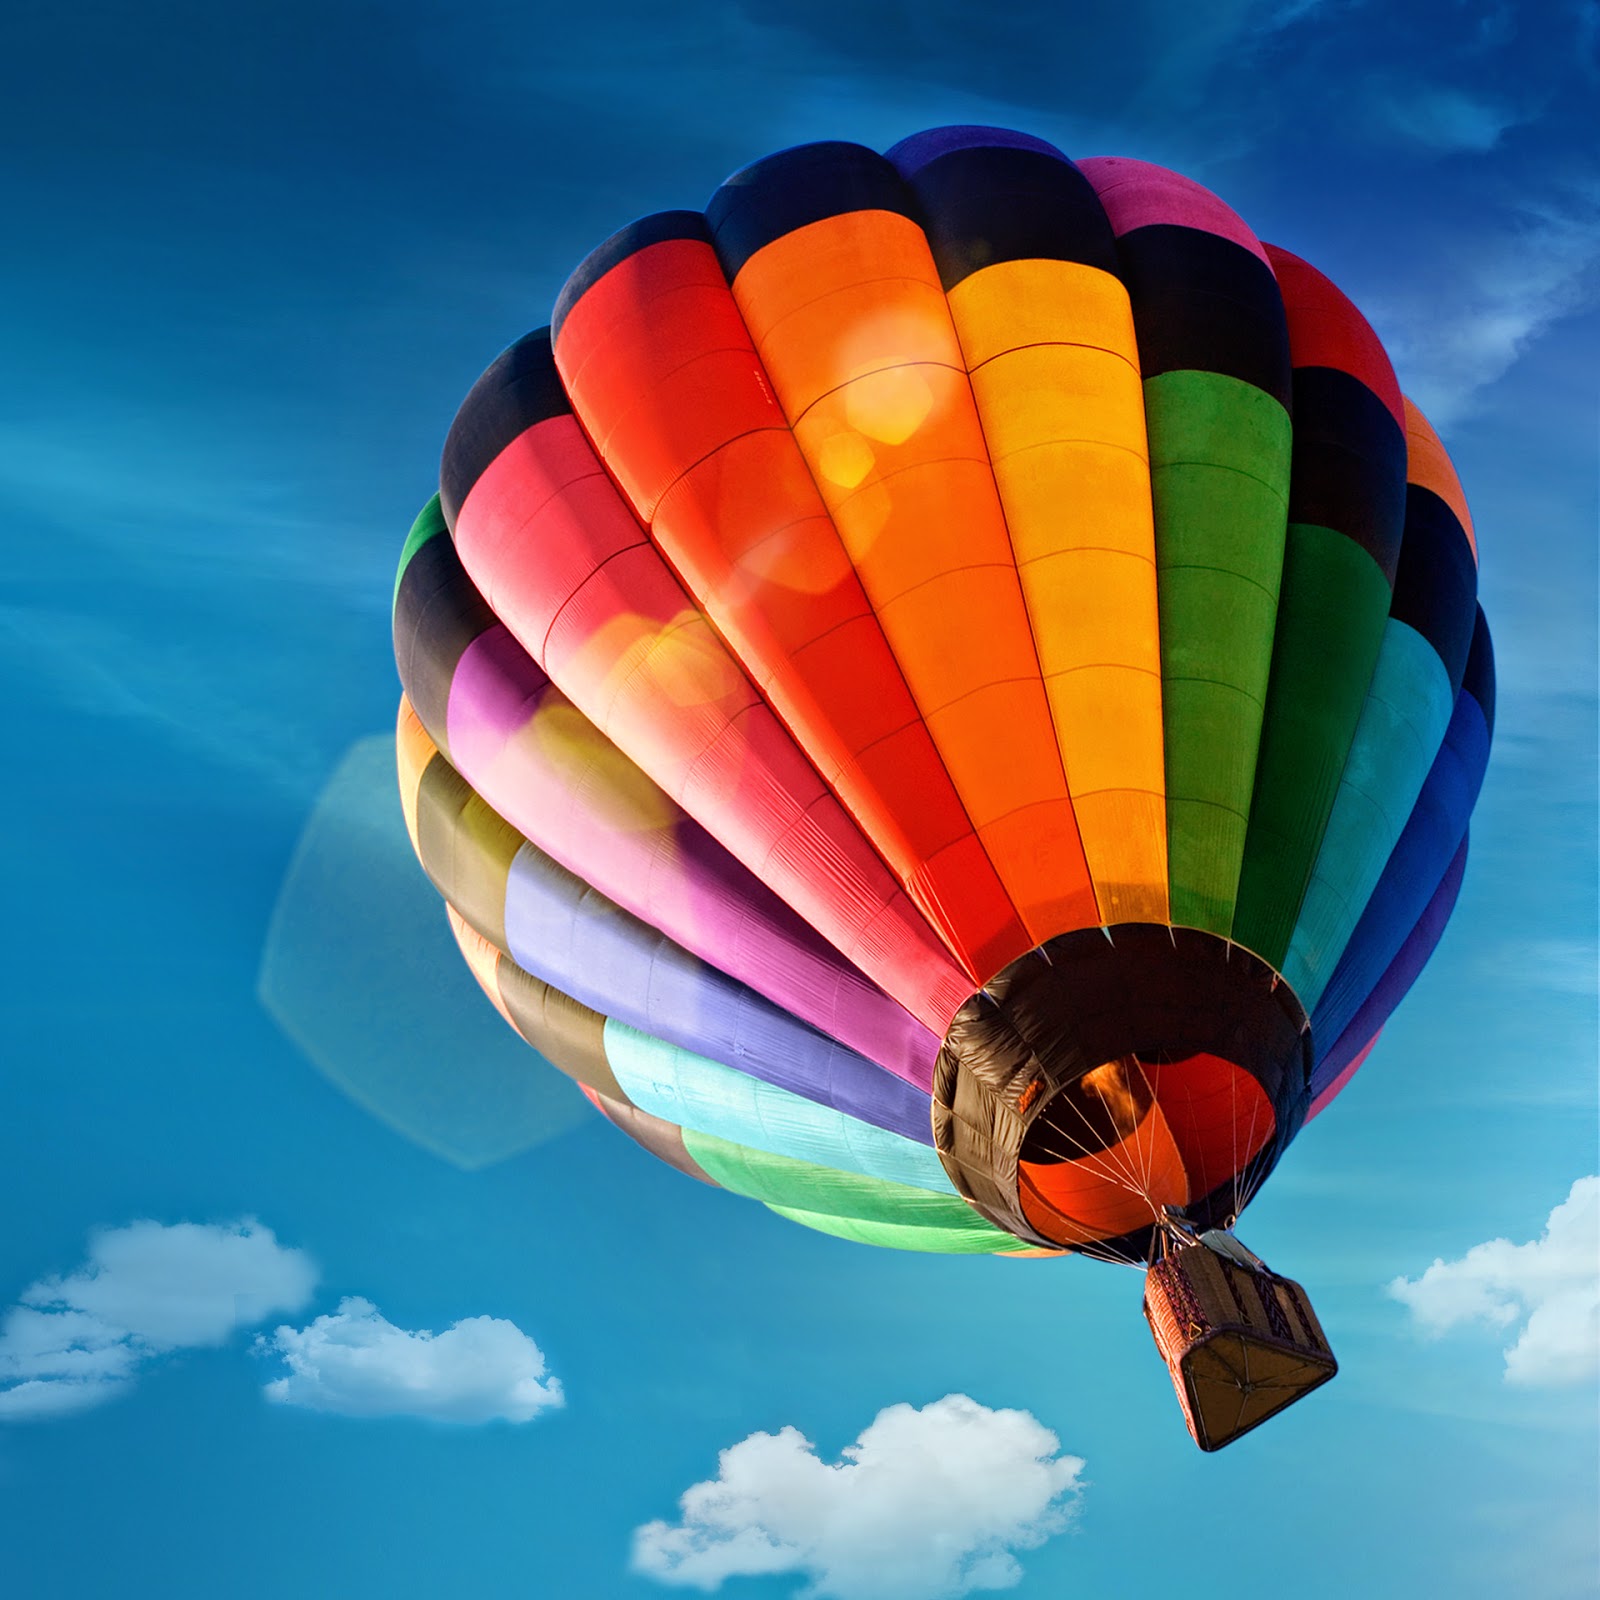 s4 live wallpaper,heißluftballon fahren,heißluftballon,himmel,fahrzeug,atmosphäre